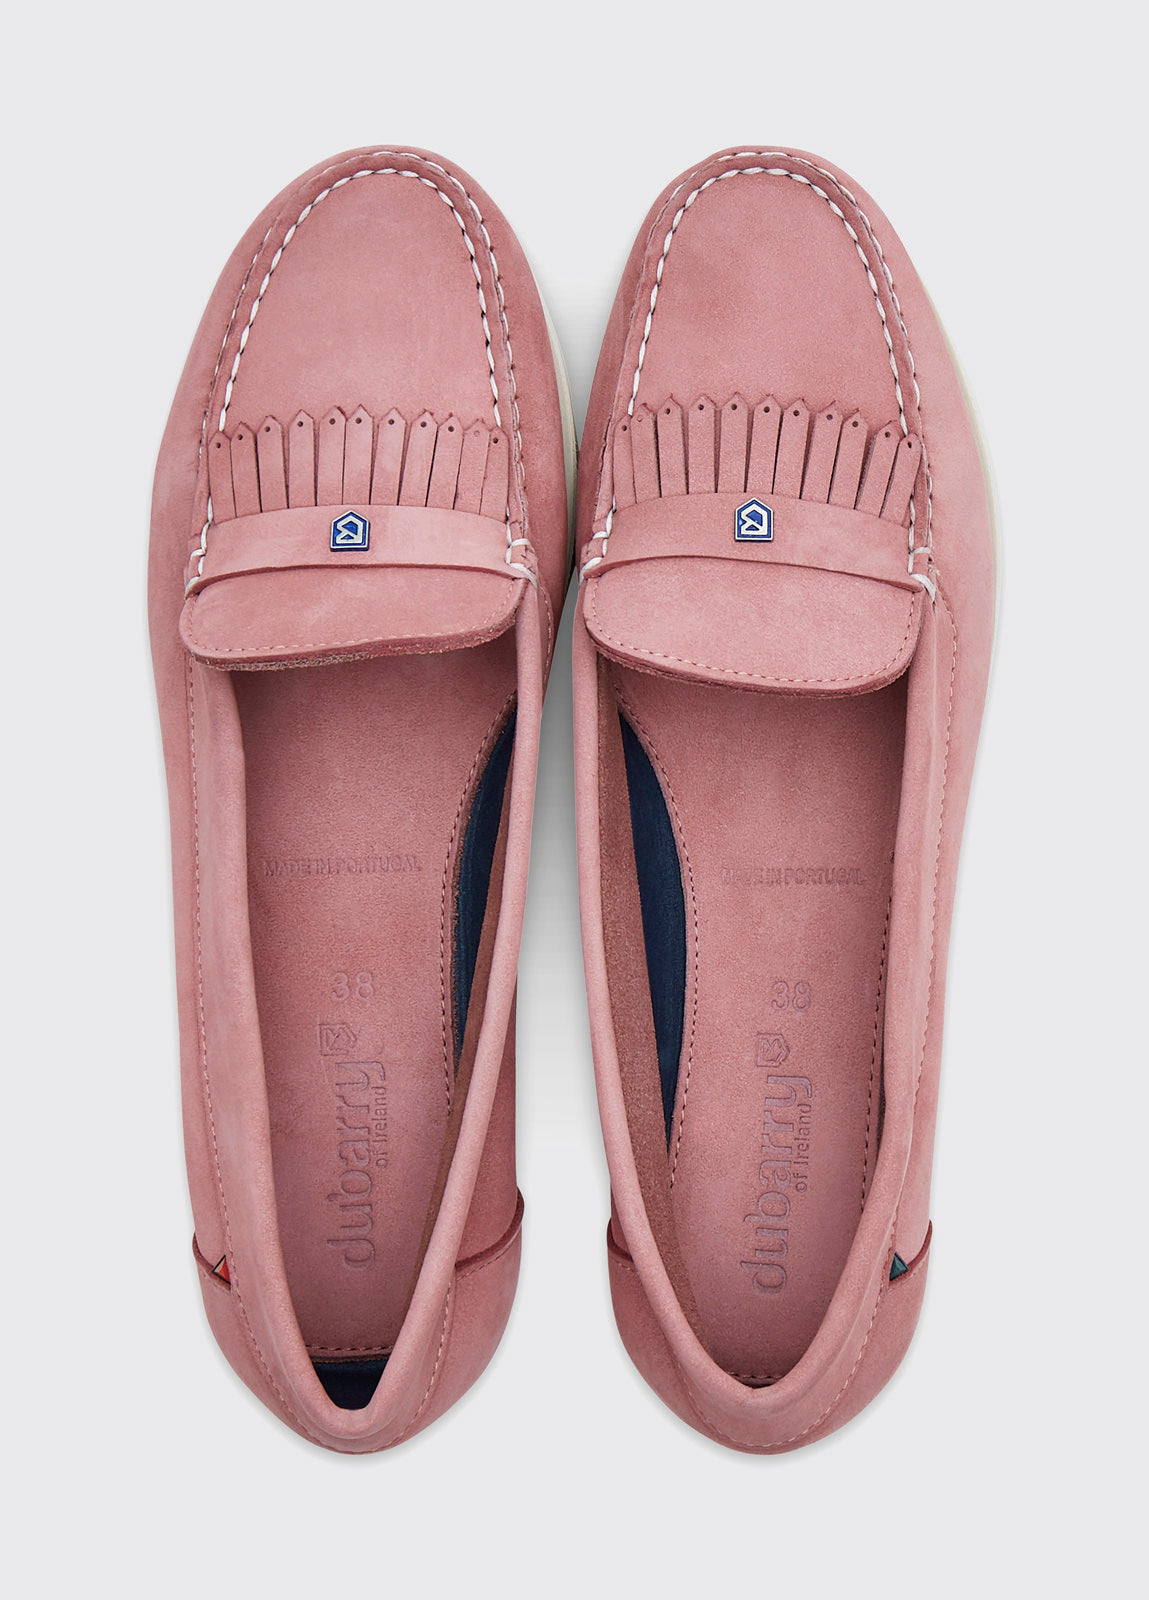 Dubarry Florence Deck Shoes - Blossom